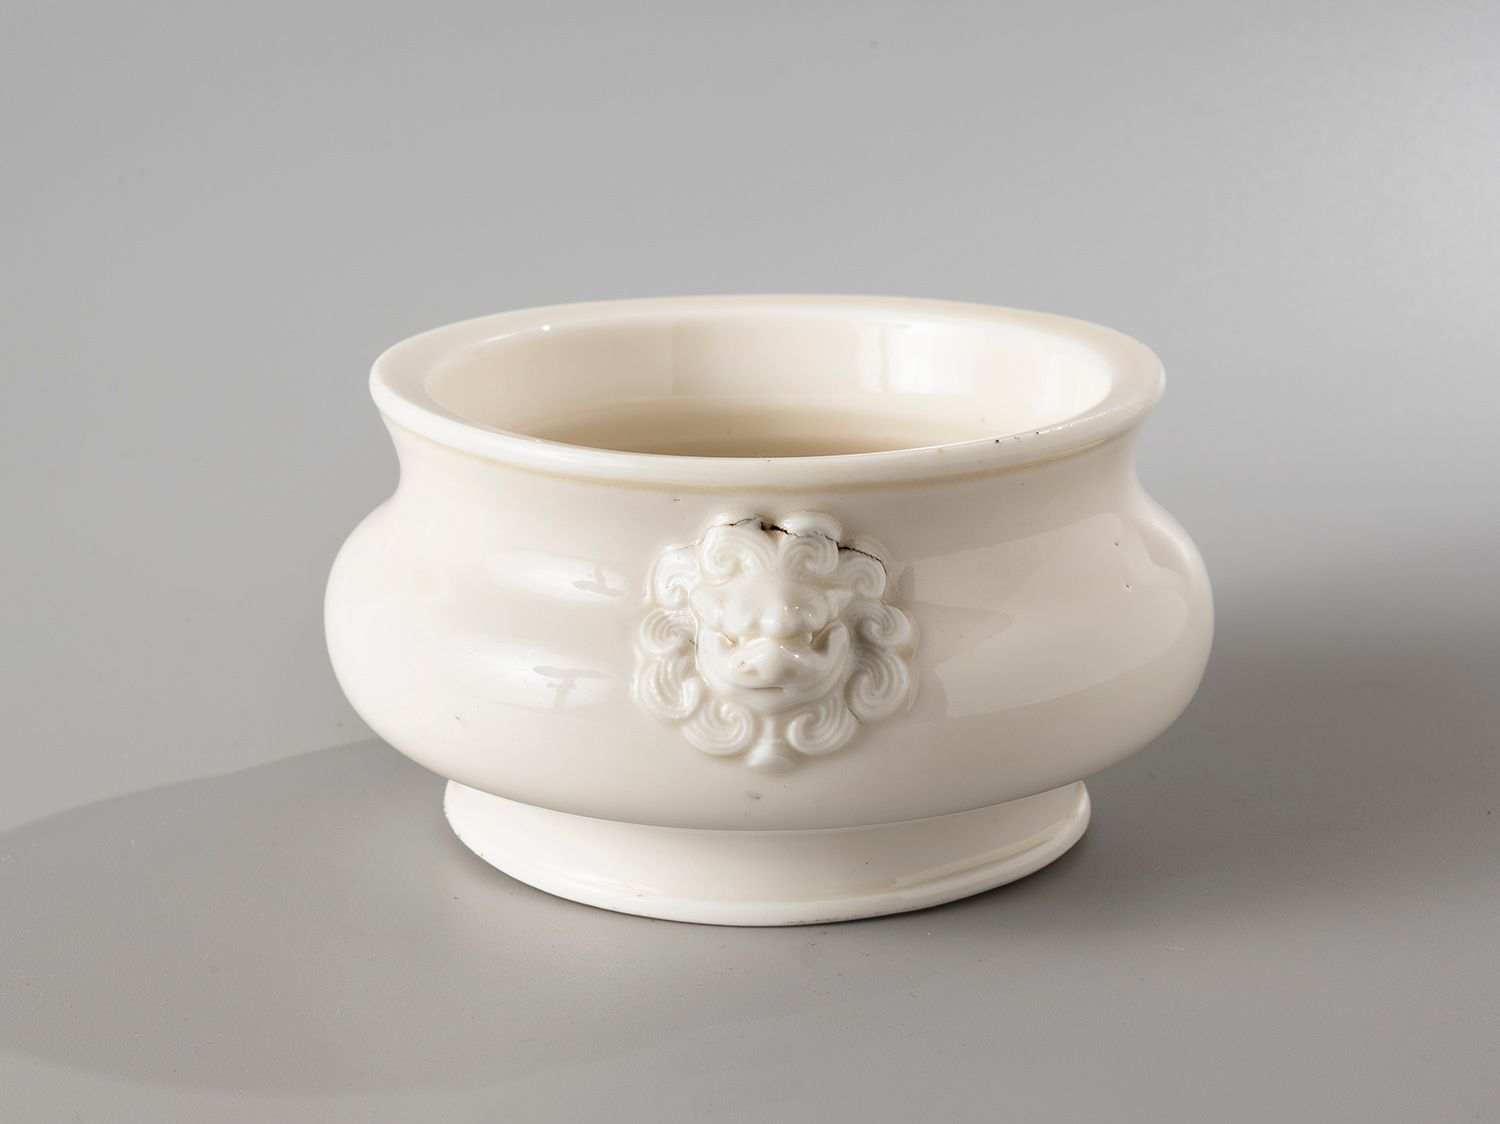 Null 中国，康熙时期，18世纪

白瓷香炉，饰以

两个狮子头形状的把手。马克

基地上的成语。

最大直径15.5厘米

(内部缺少一个元件，手柄附近有两&hellip;